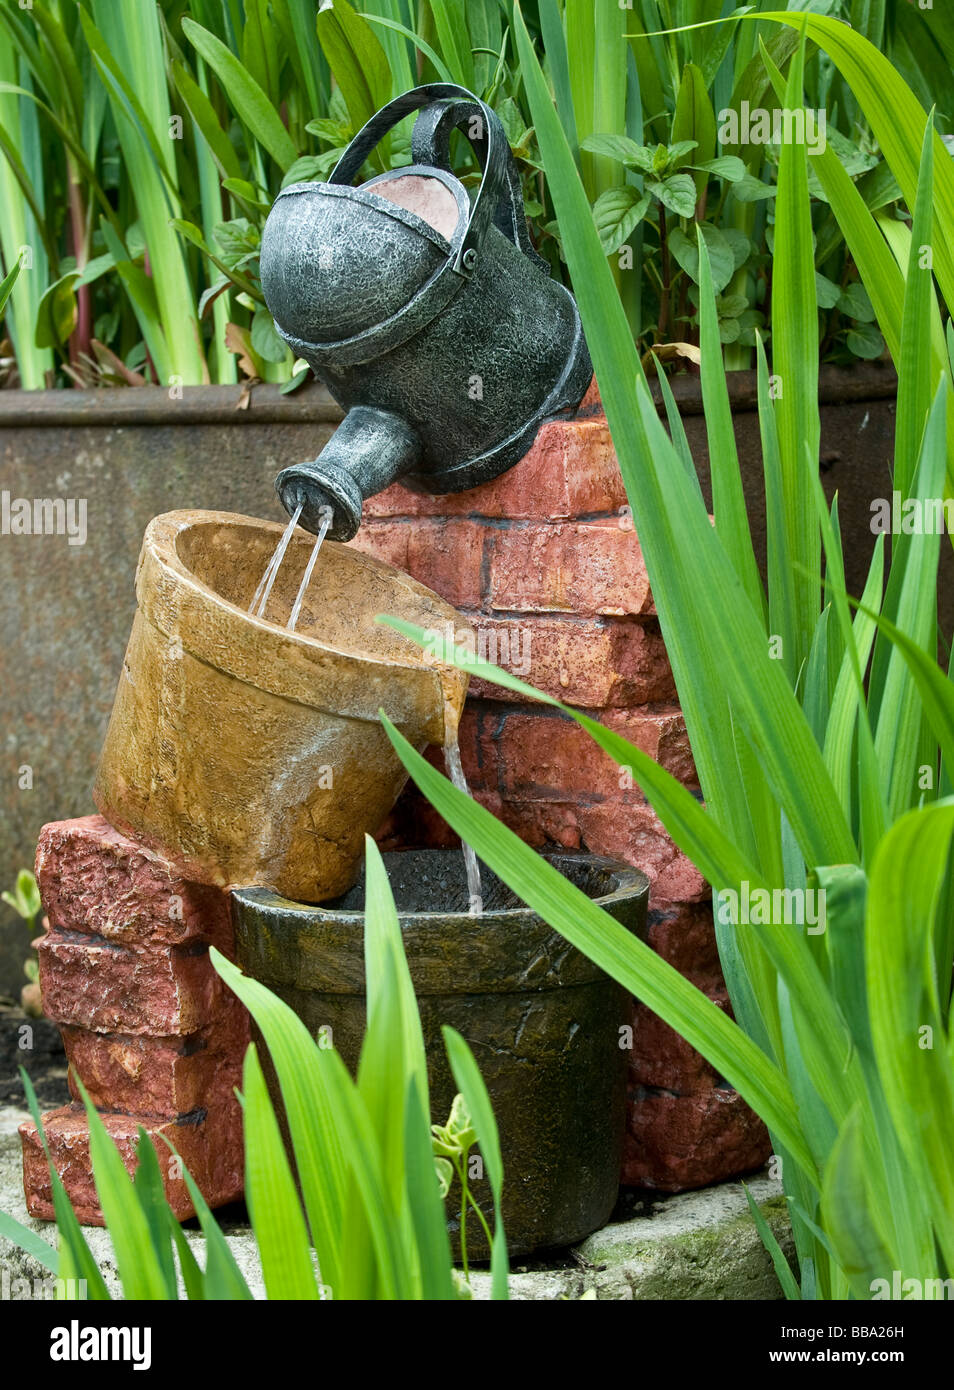 Ornamental Garden Water Feature Stock Photo